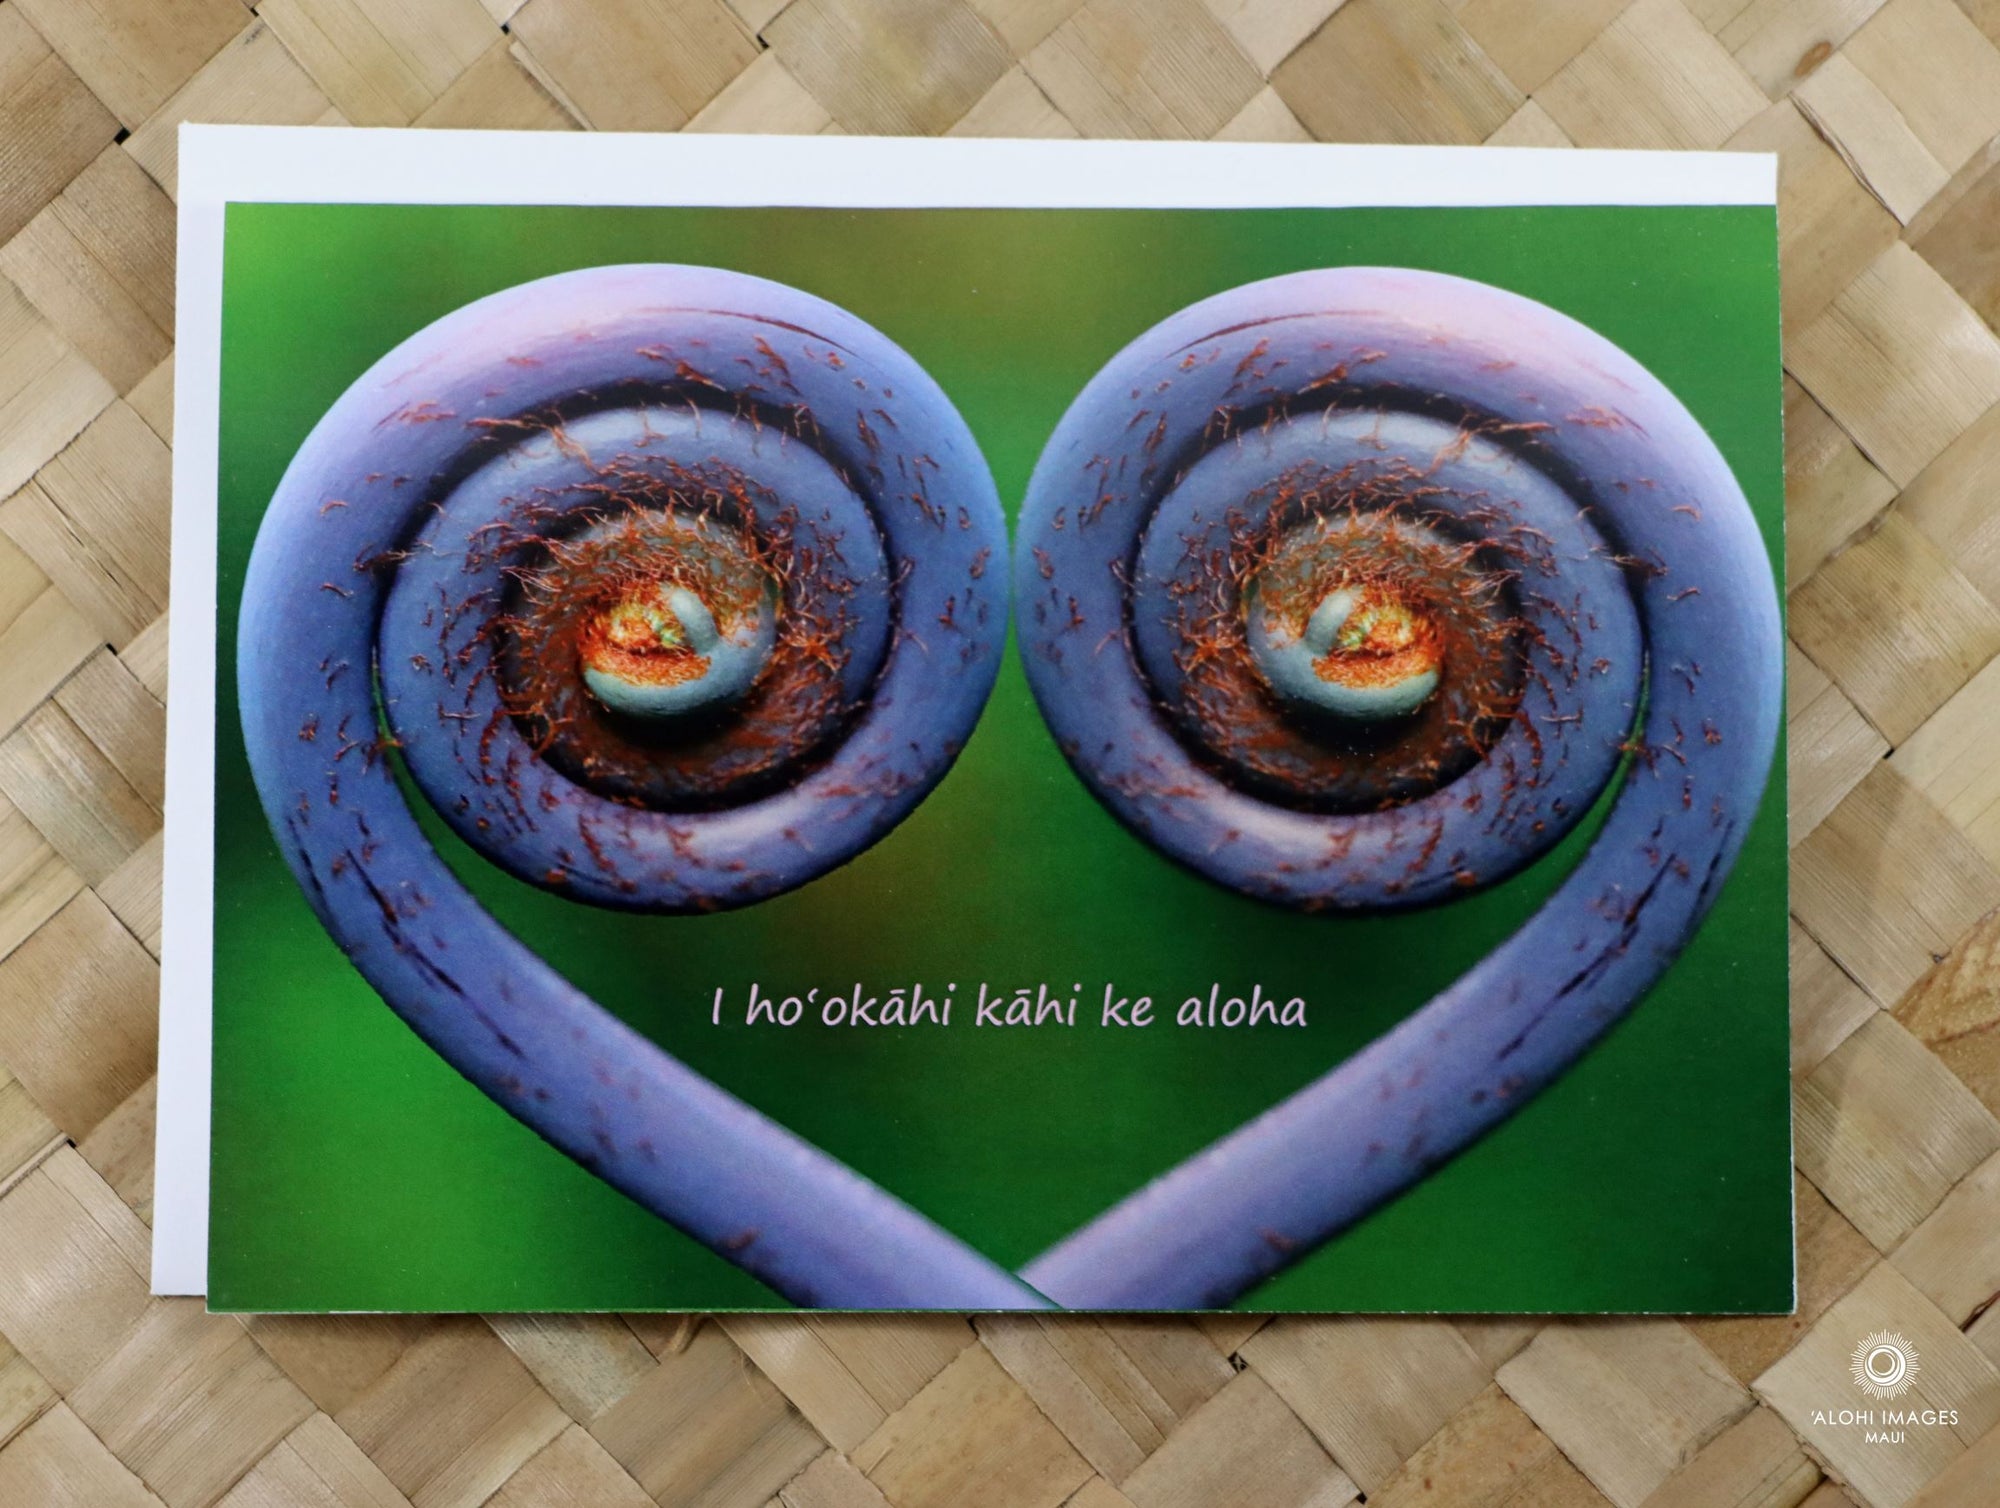 Pop-Up Mākeke - Alohi Images Maui - Uluhe (fern) - WeddingAnniversary Greeting Card - Be One in Love - Front View